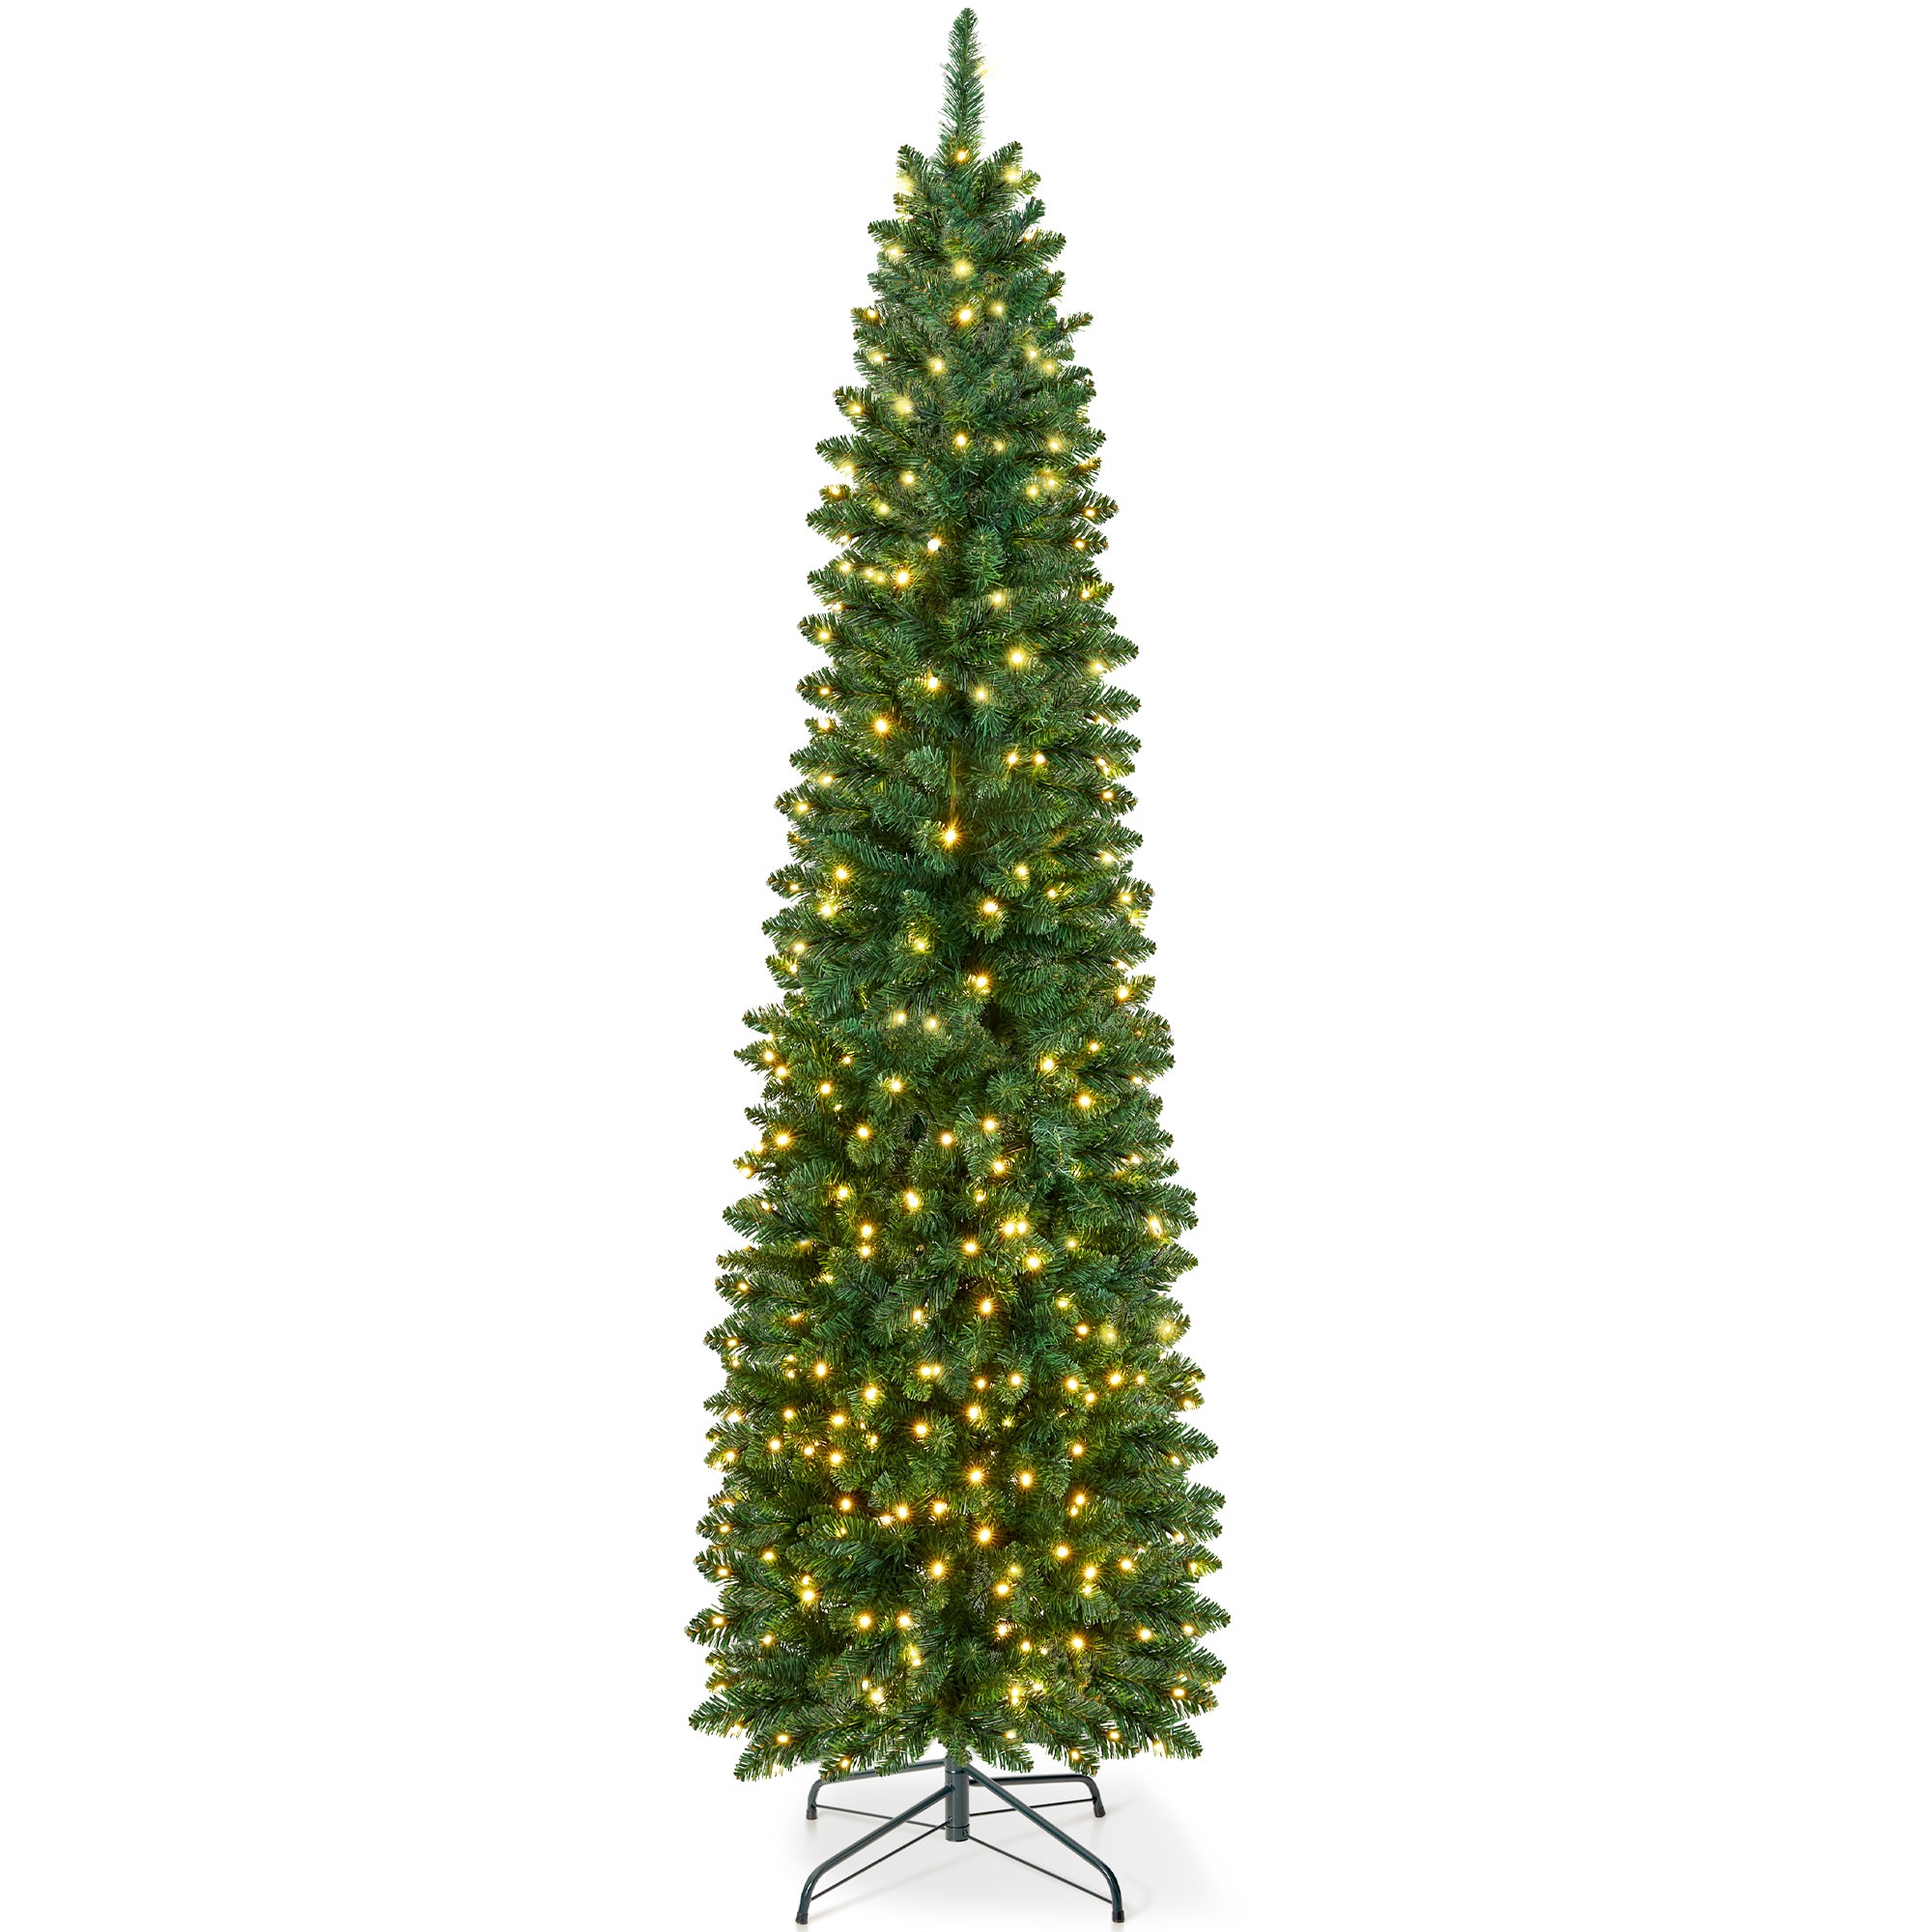 VeryMerry 'Aspen' Slim Pencil Pre Lit Christmas Tree Built-In Warm White LED Lights